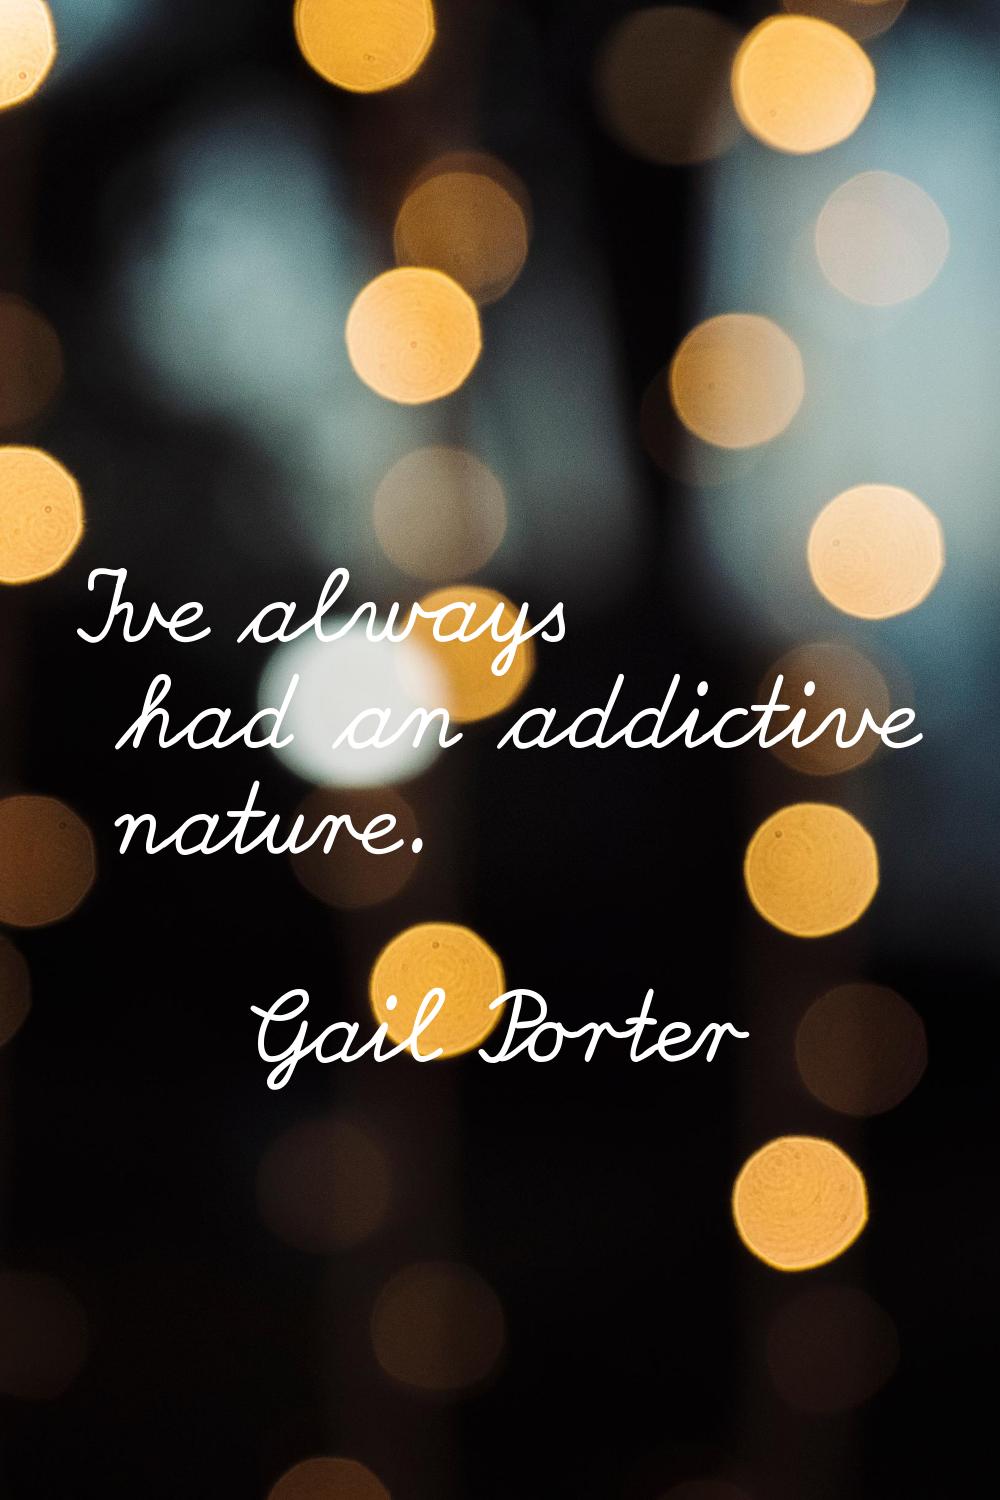 I've always had an addictive nature.